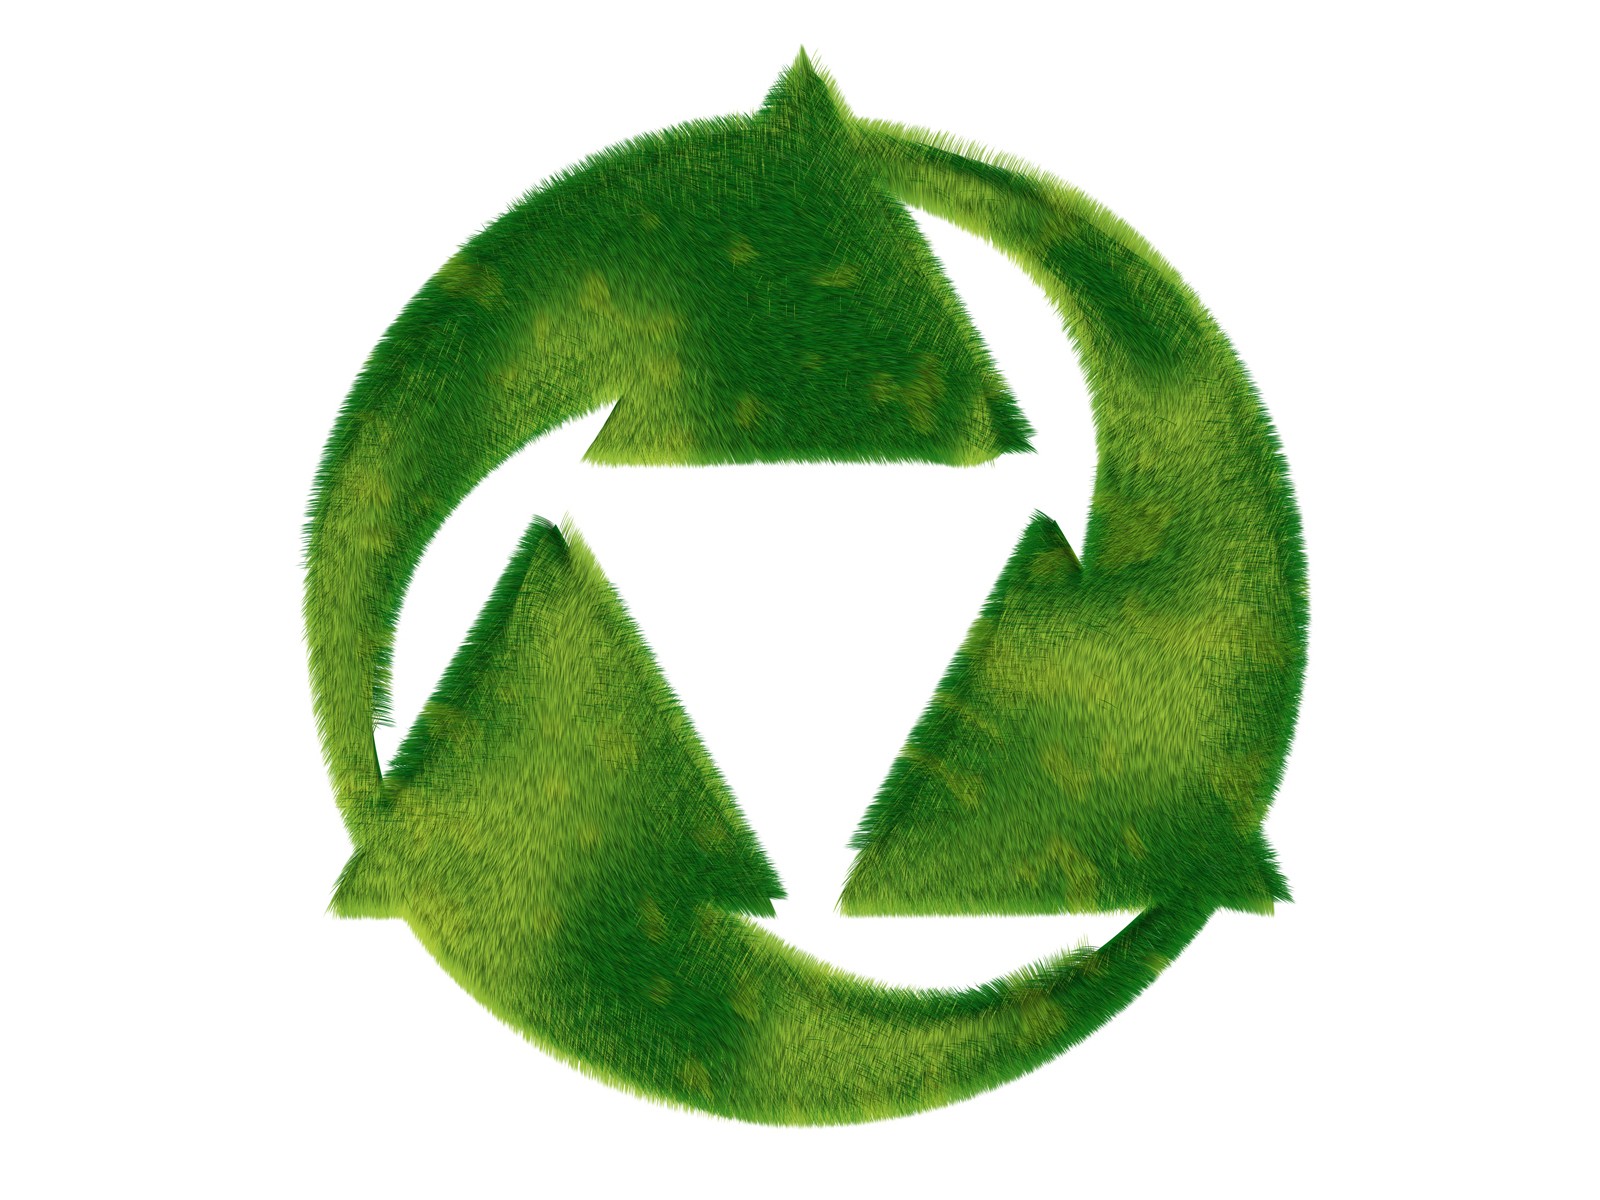 Recycle Symbols And Environmental Green Icons 1600*1200 - Not Environmentally Friendly - HD Wallpaper 